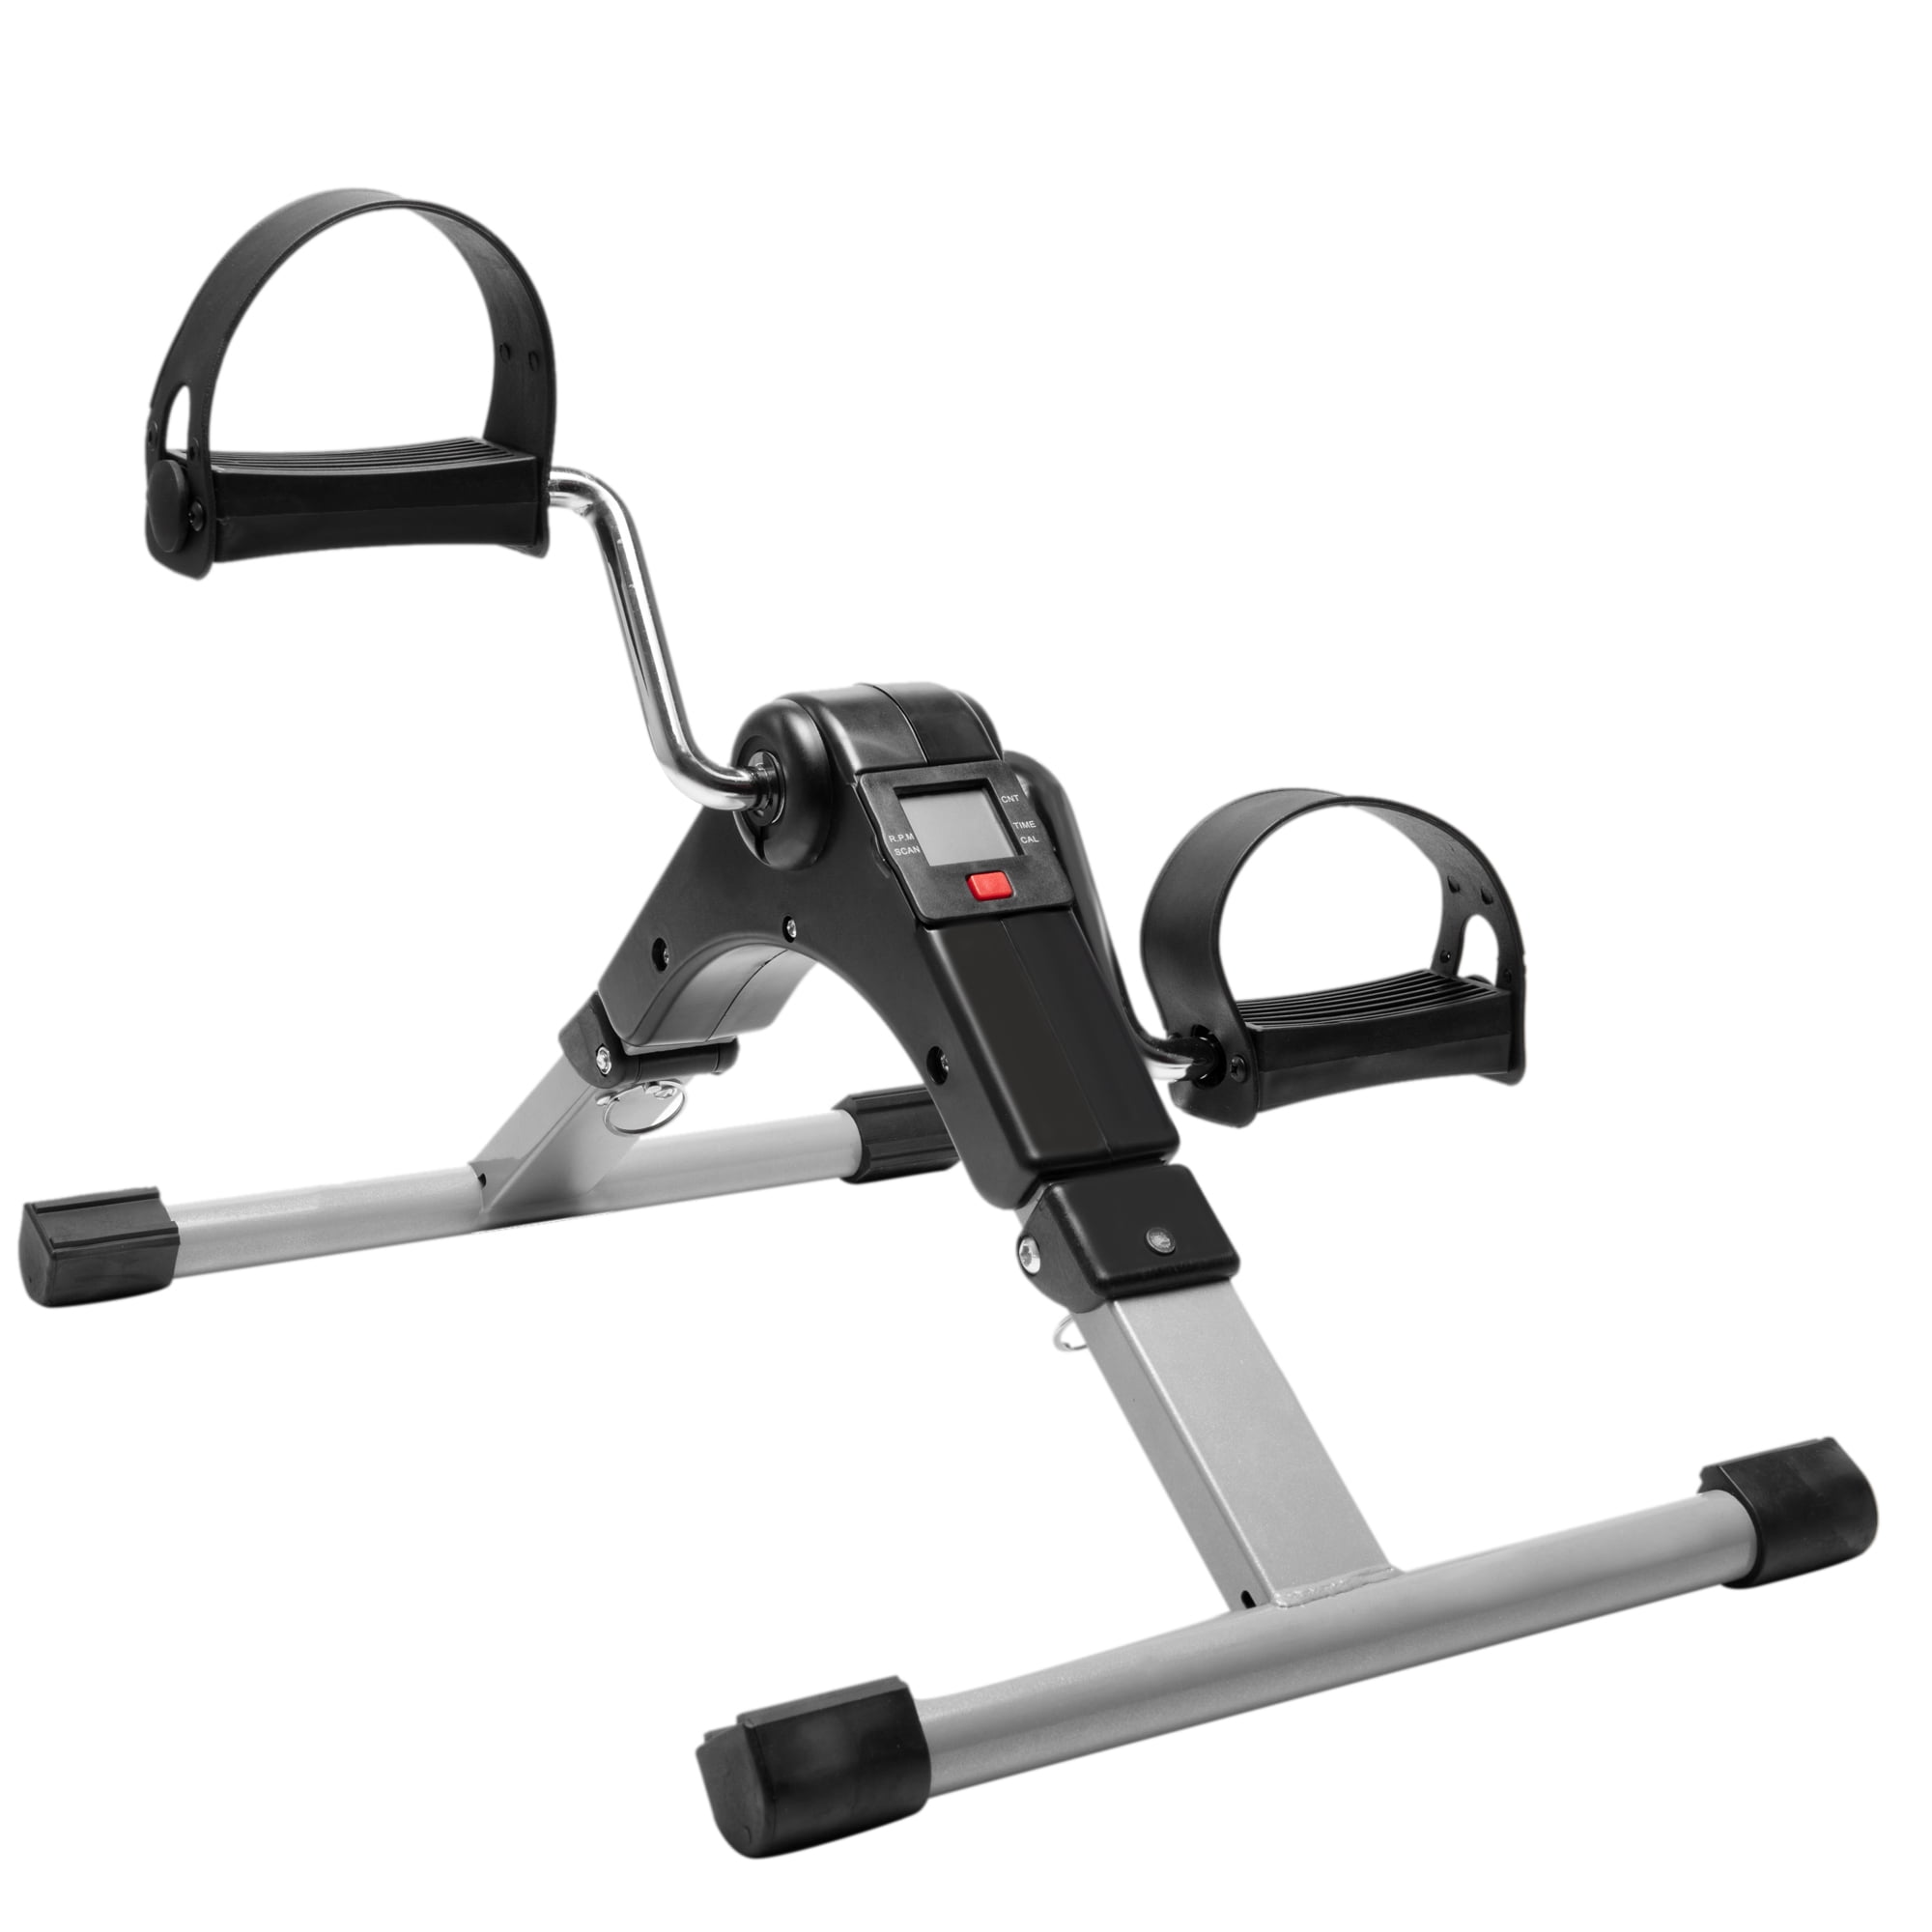 Folding Pedal Exerciser, Mini Cycle Exercise Bike Leg Arm Trainer for